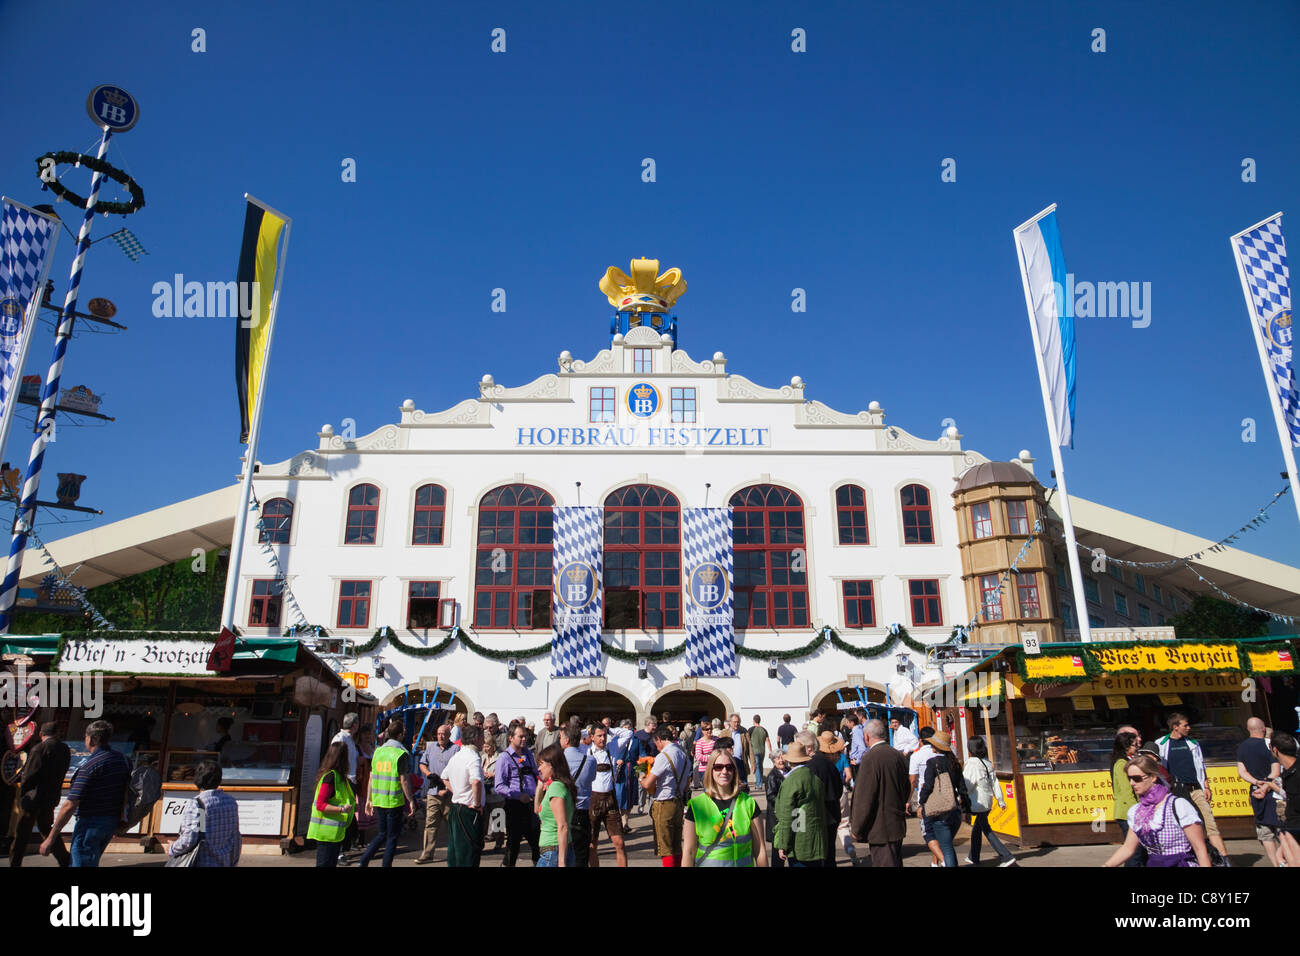 https://c8.alamy.com/comp/C8Y1E7/germany-bavaria-munich-oktoberfest-entrance-to-the-hofbrauhaus-beer-C8Y1E7.jpg